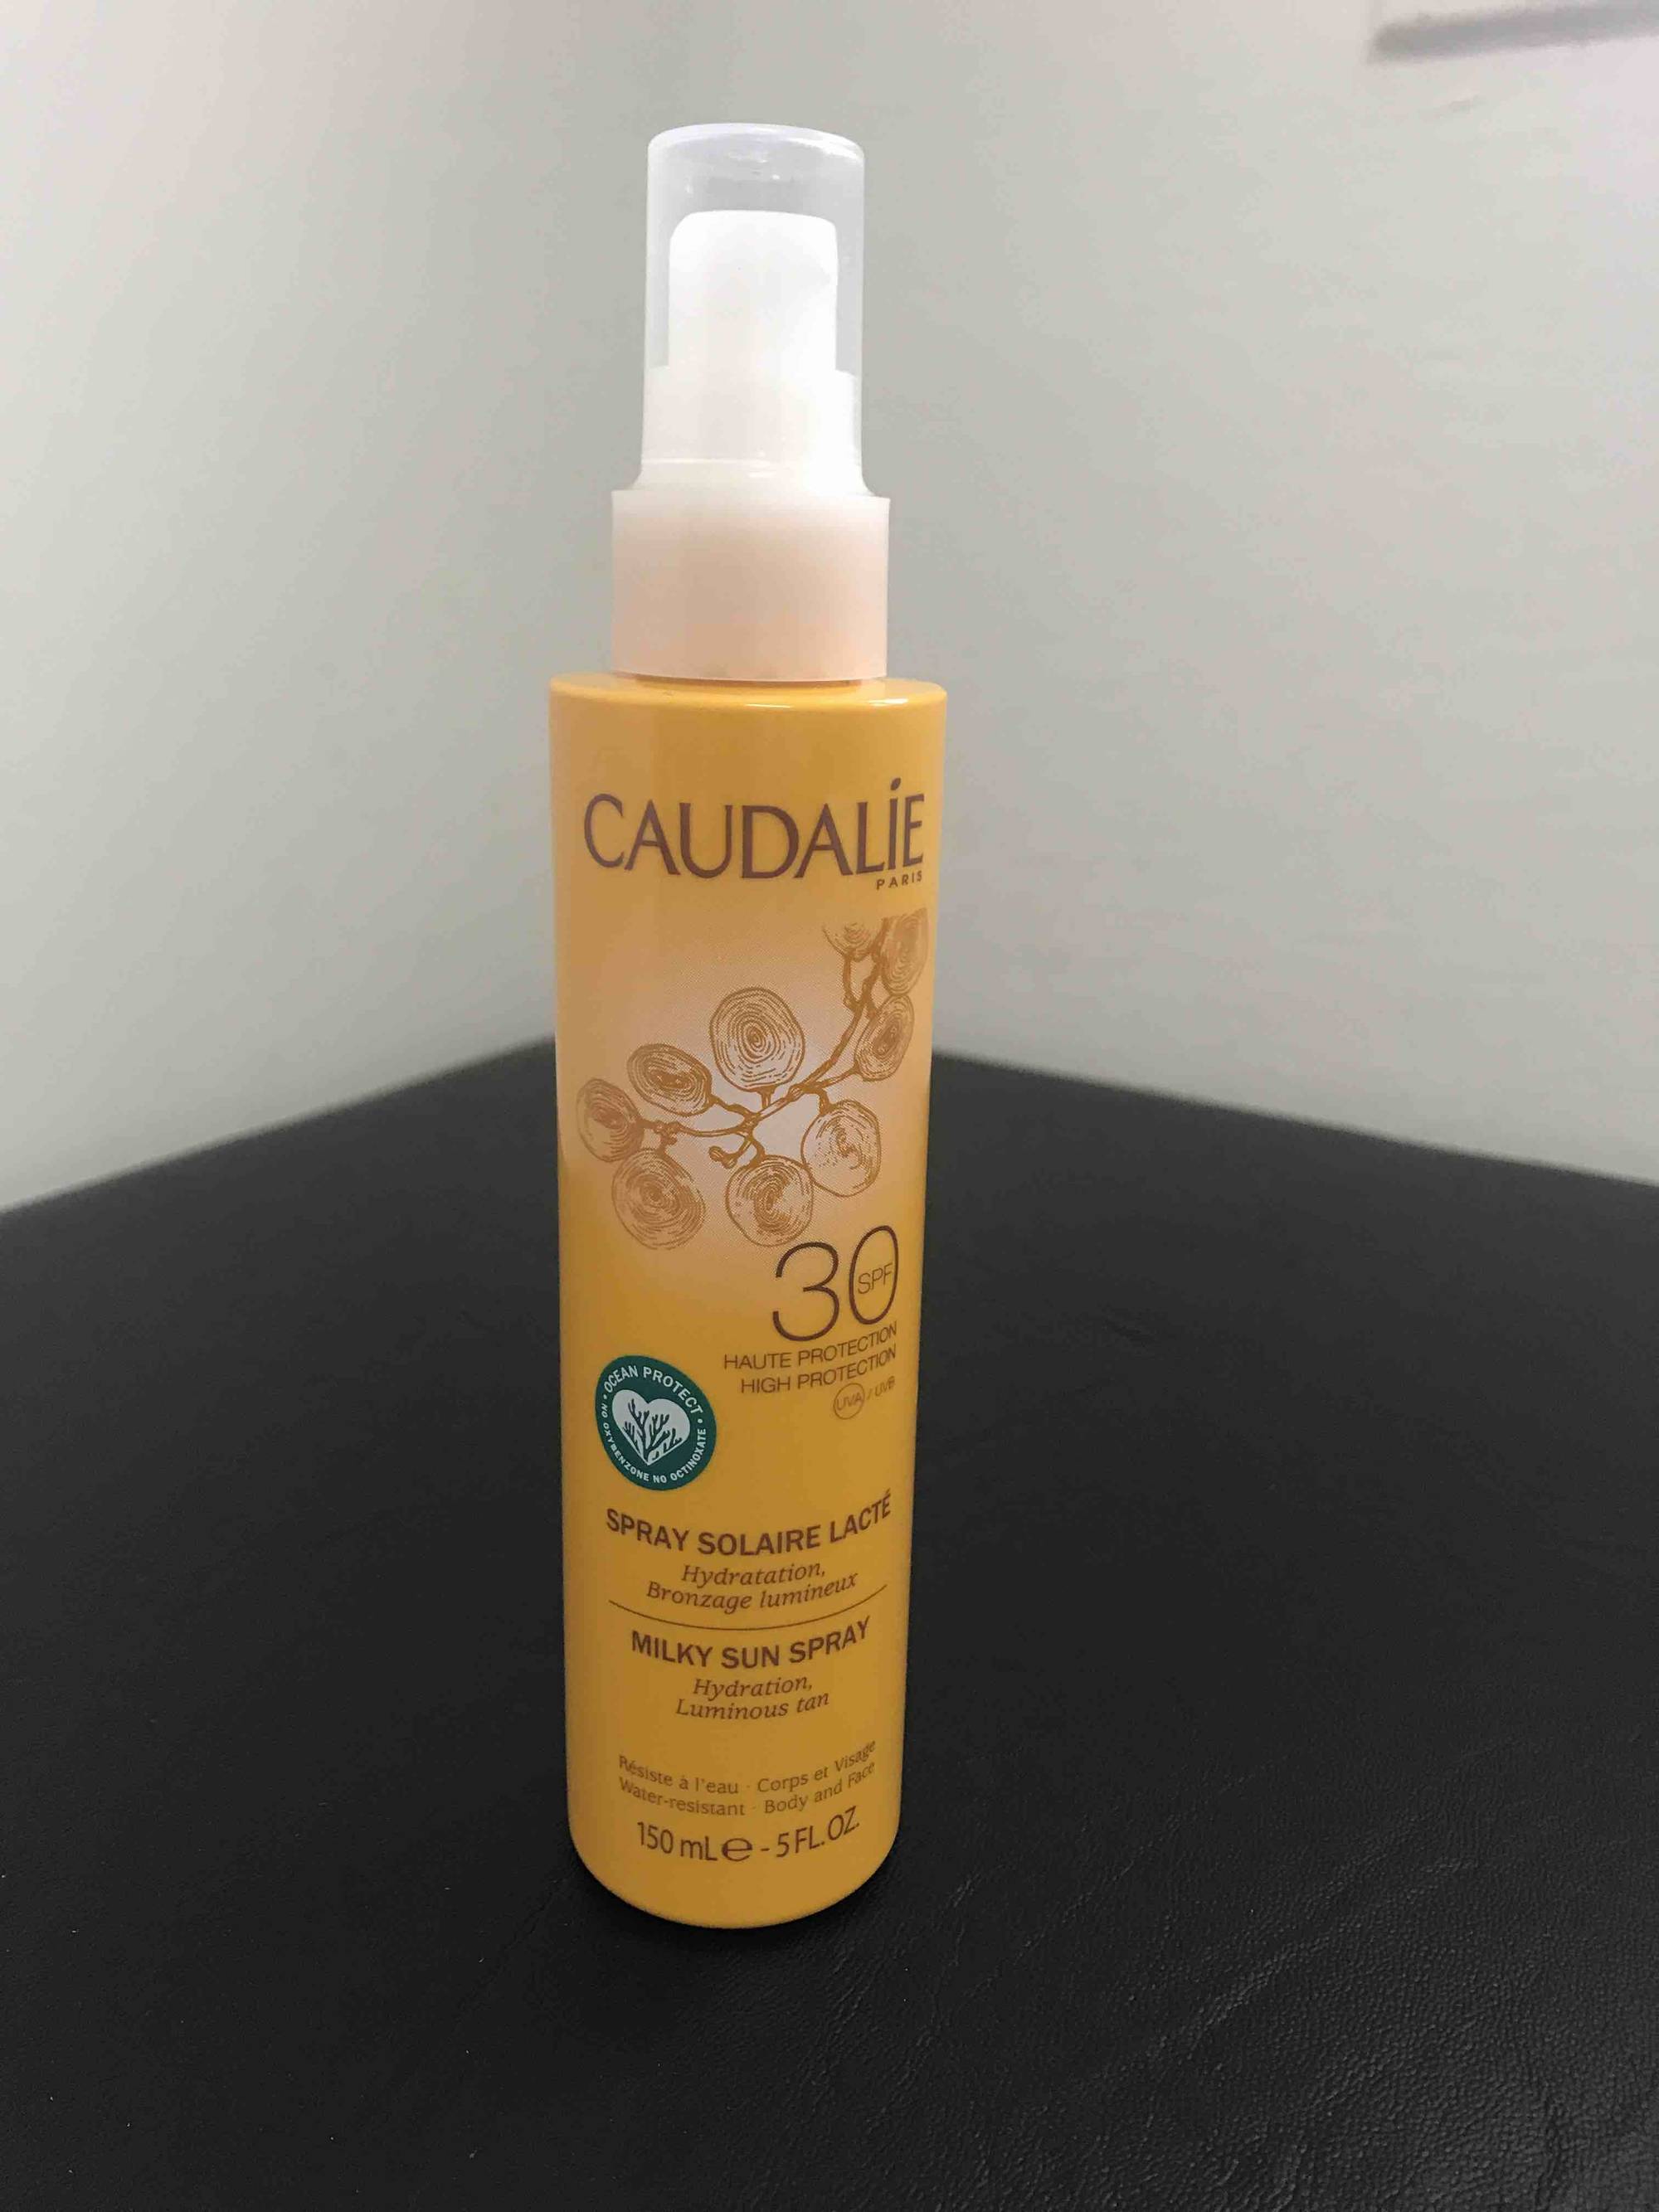 CAUDALIE - Spray solaire lacté - Hydratation bronzage lumineux